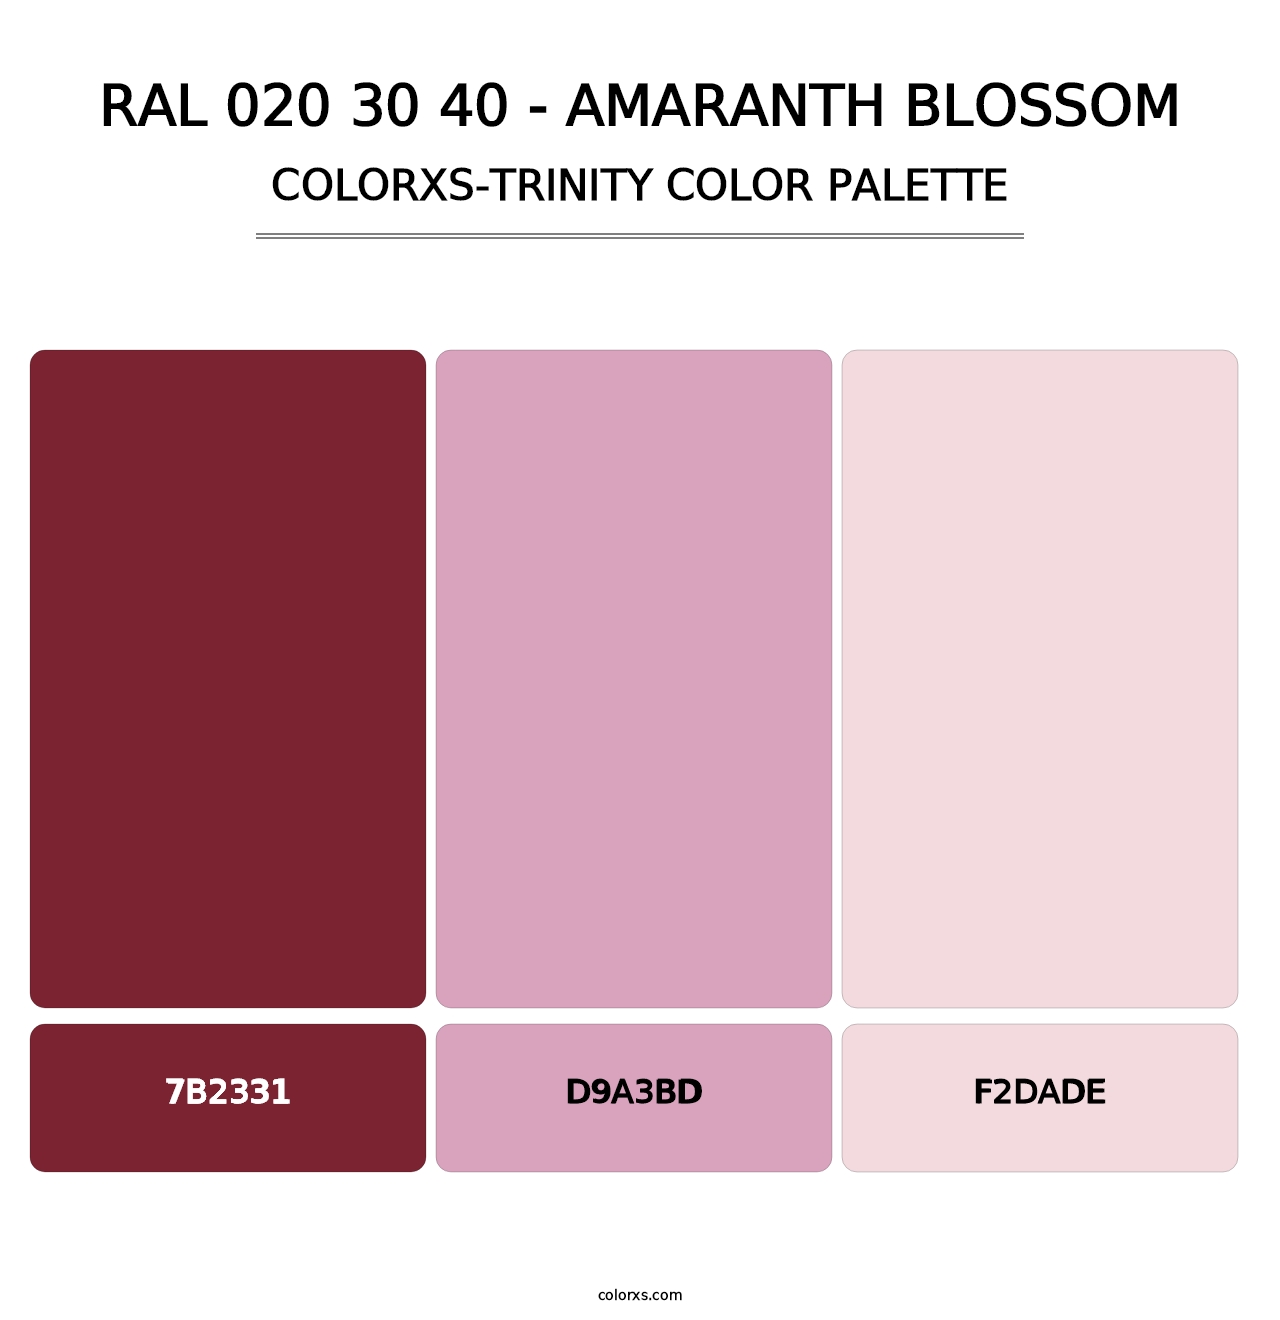 RAL 020 30 40 - Amaranth Blossom - Colorxs Trinity Palette